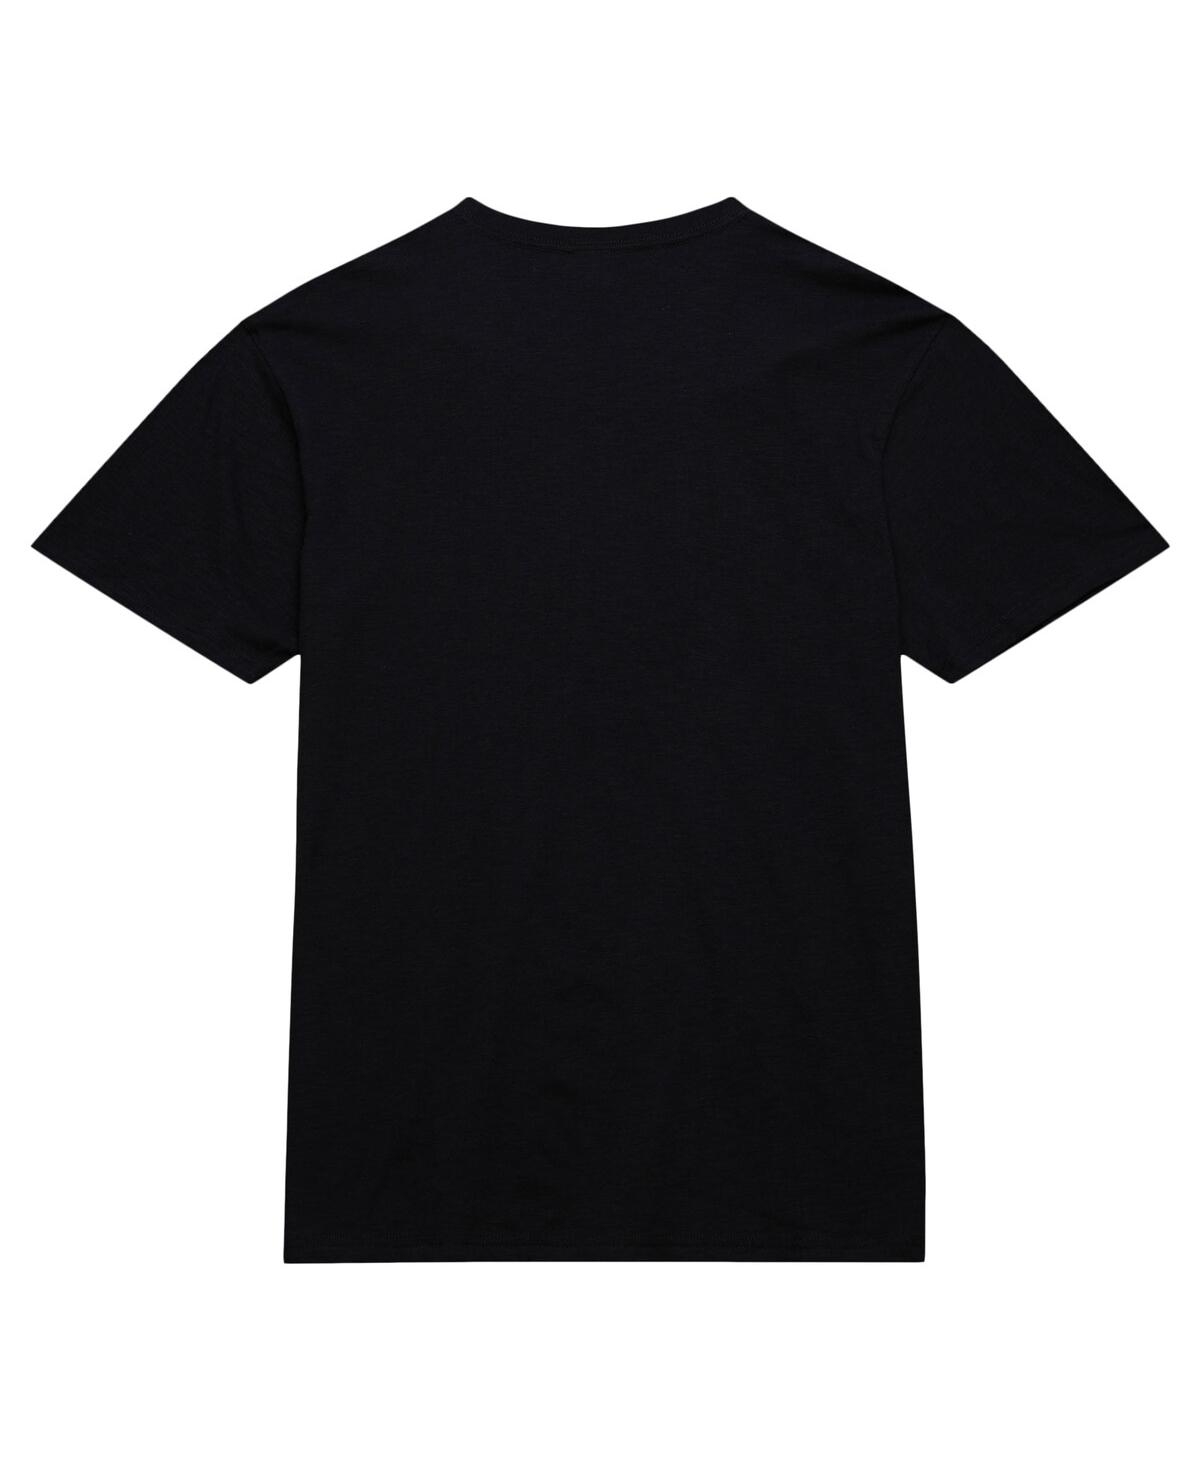 Shop Mitchell & Ness Men's  Black Philadelphia Flyers Legendary Slub T-shirt